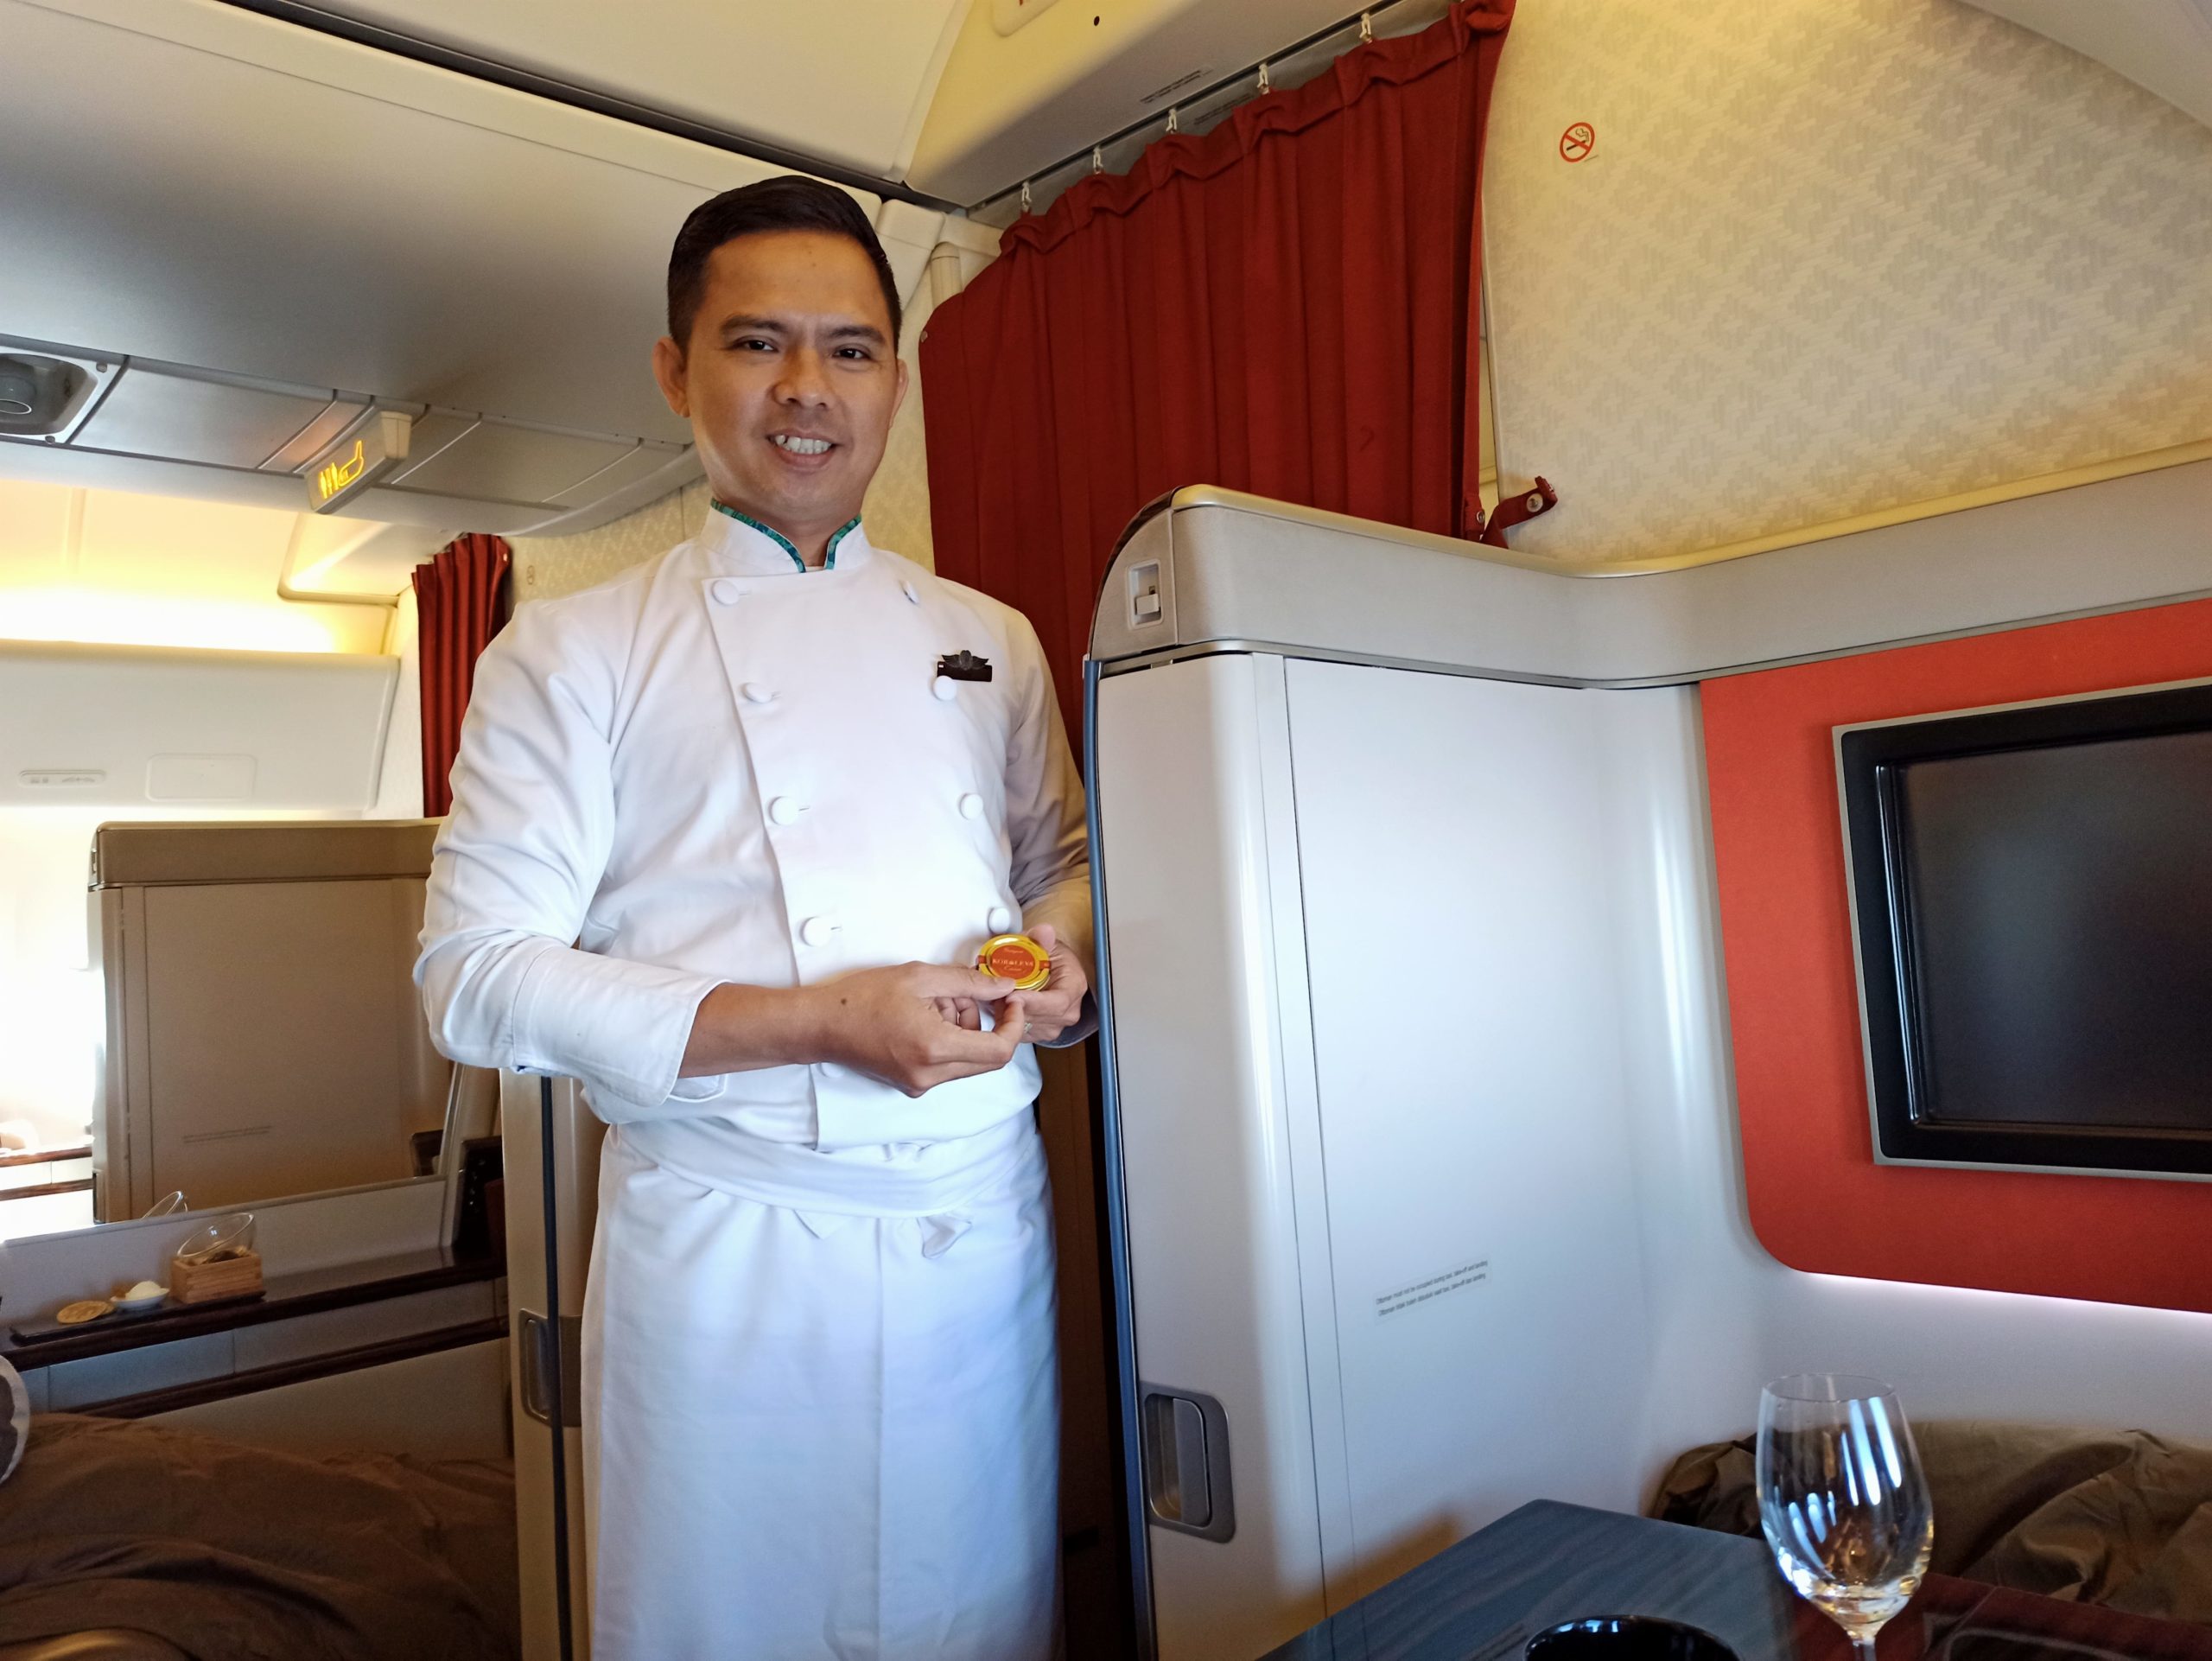 Garuda Indonesia First Class